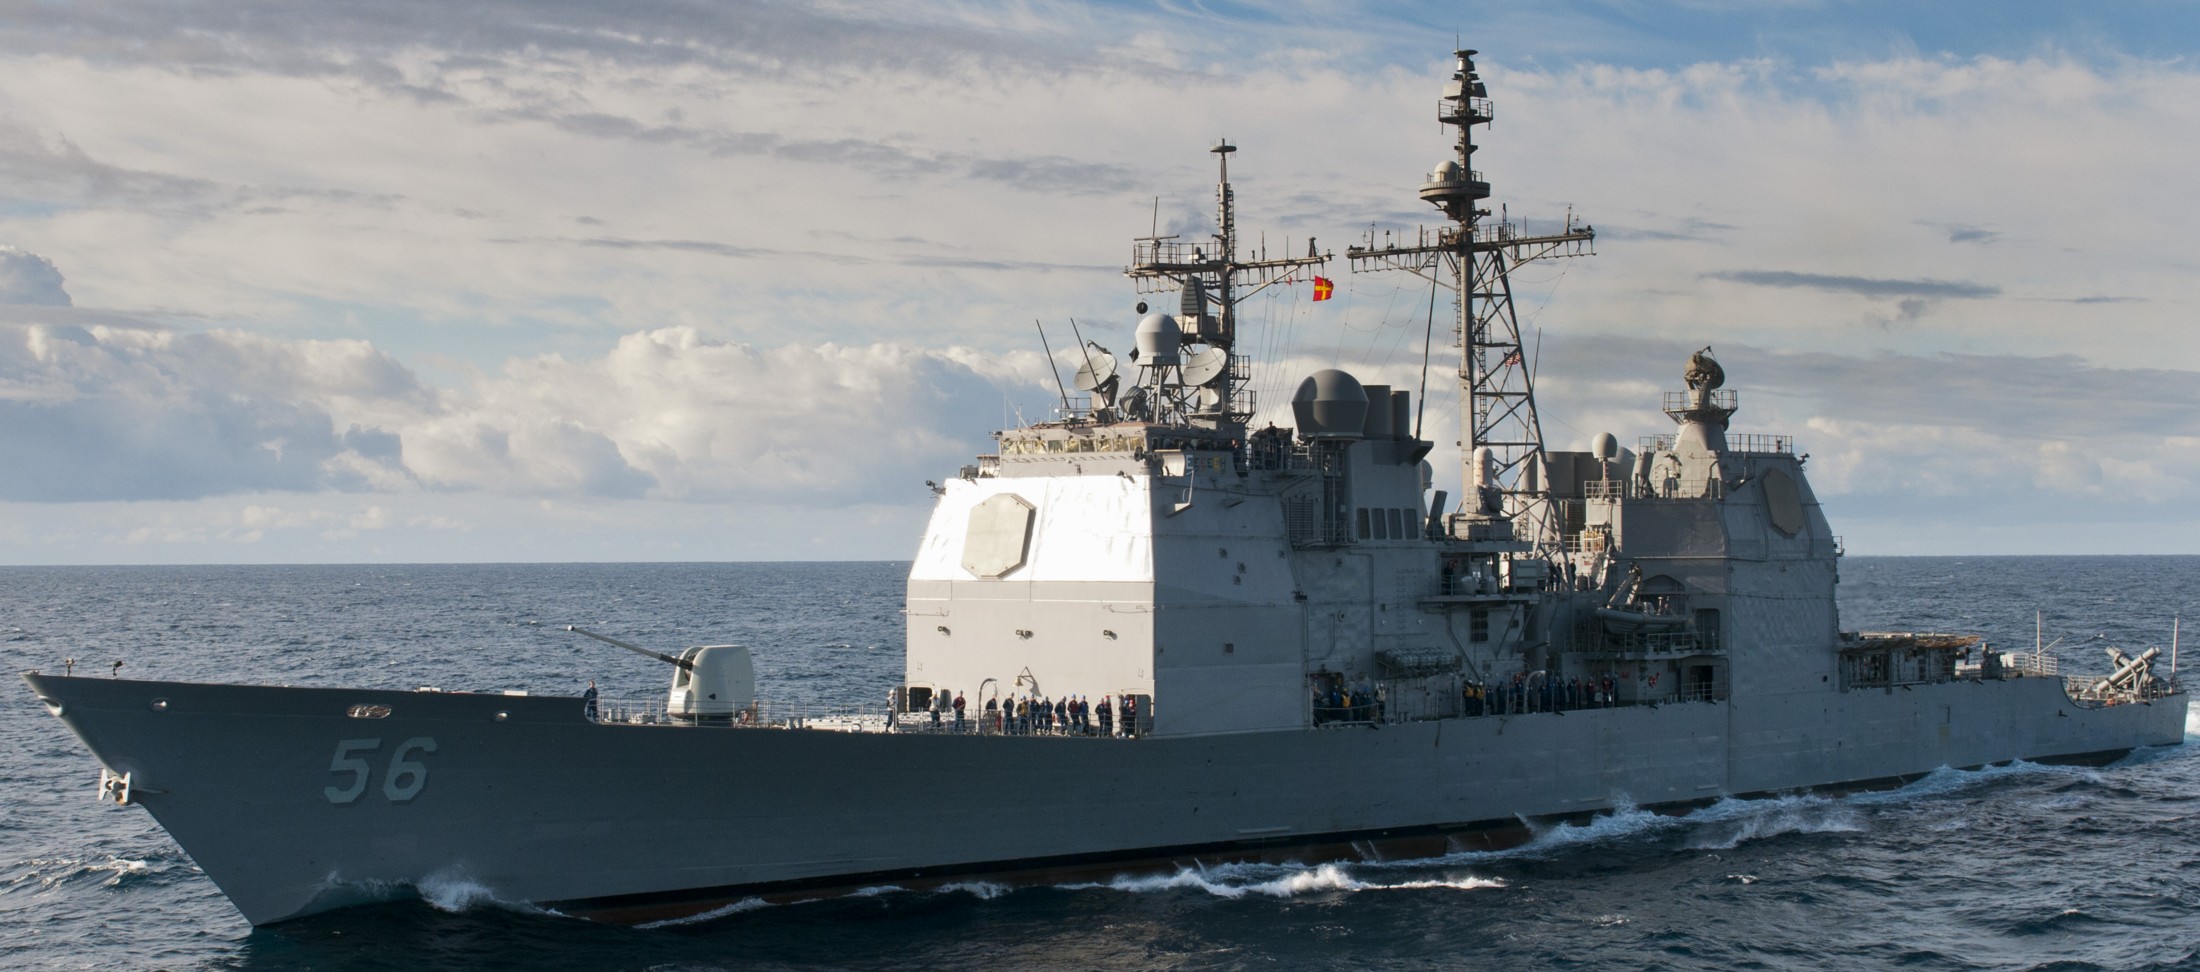 cg-56 uss san jacinto ticonderoga class guided missile cruiser aegis us navy 39